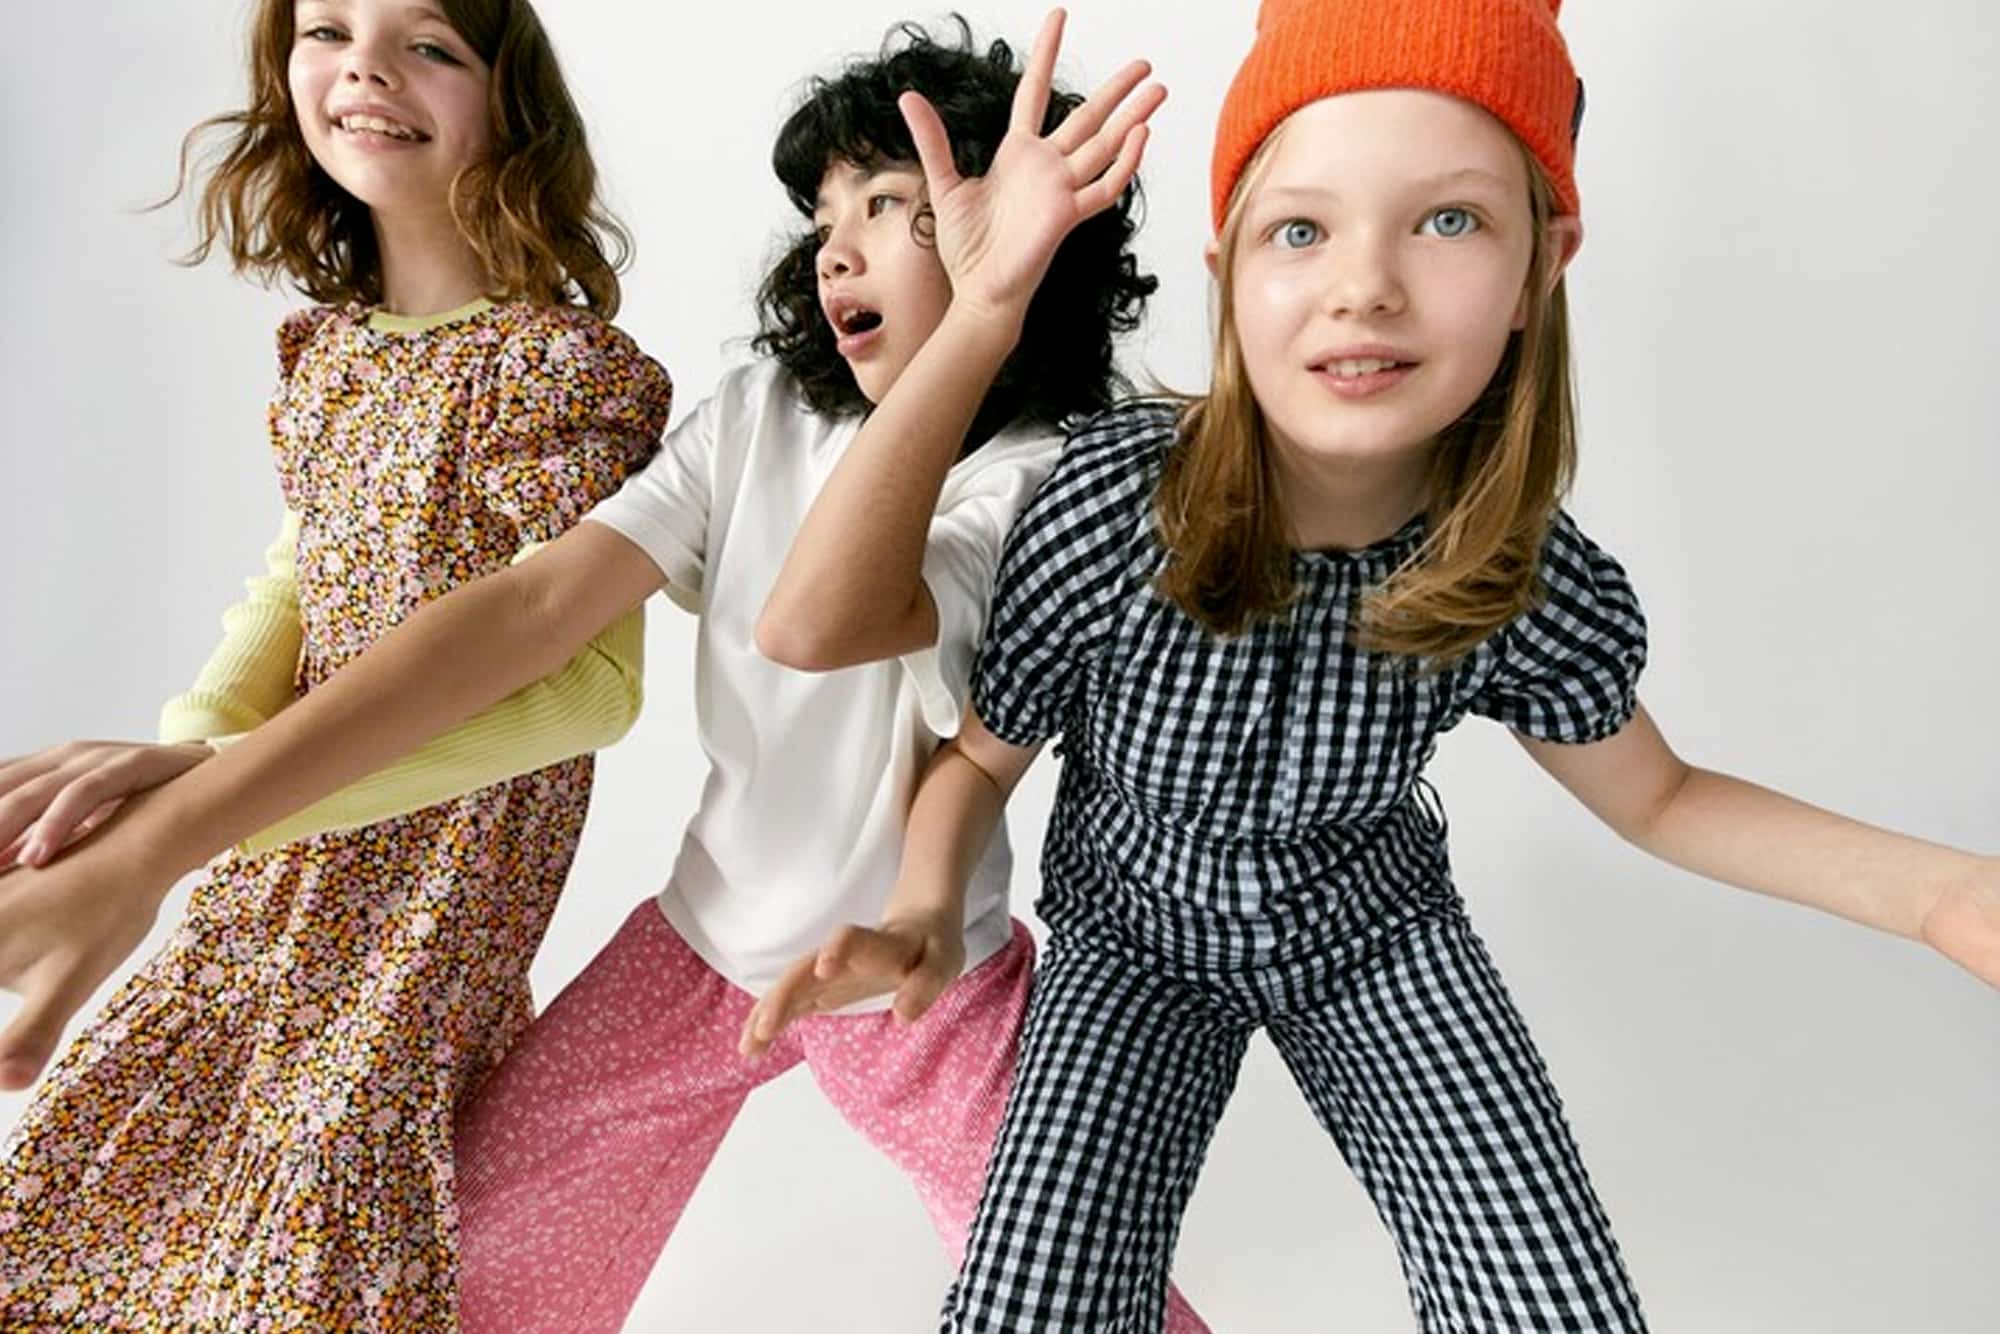 John Lewis supercharges kids fashion plans » Velocity Institute